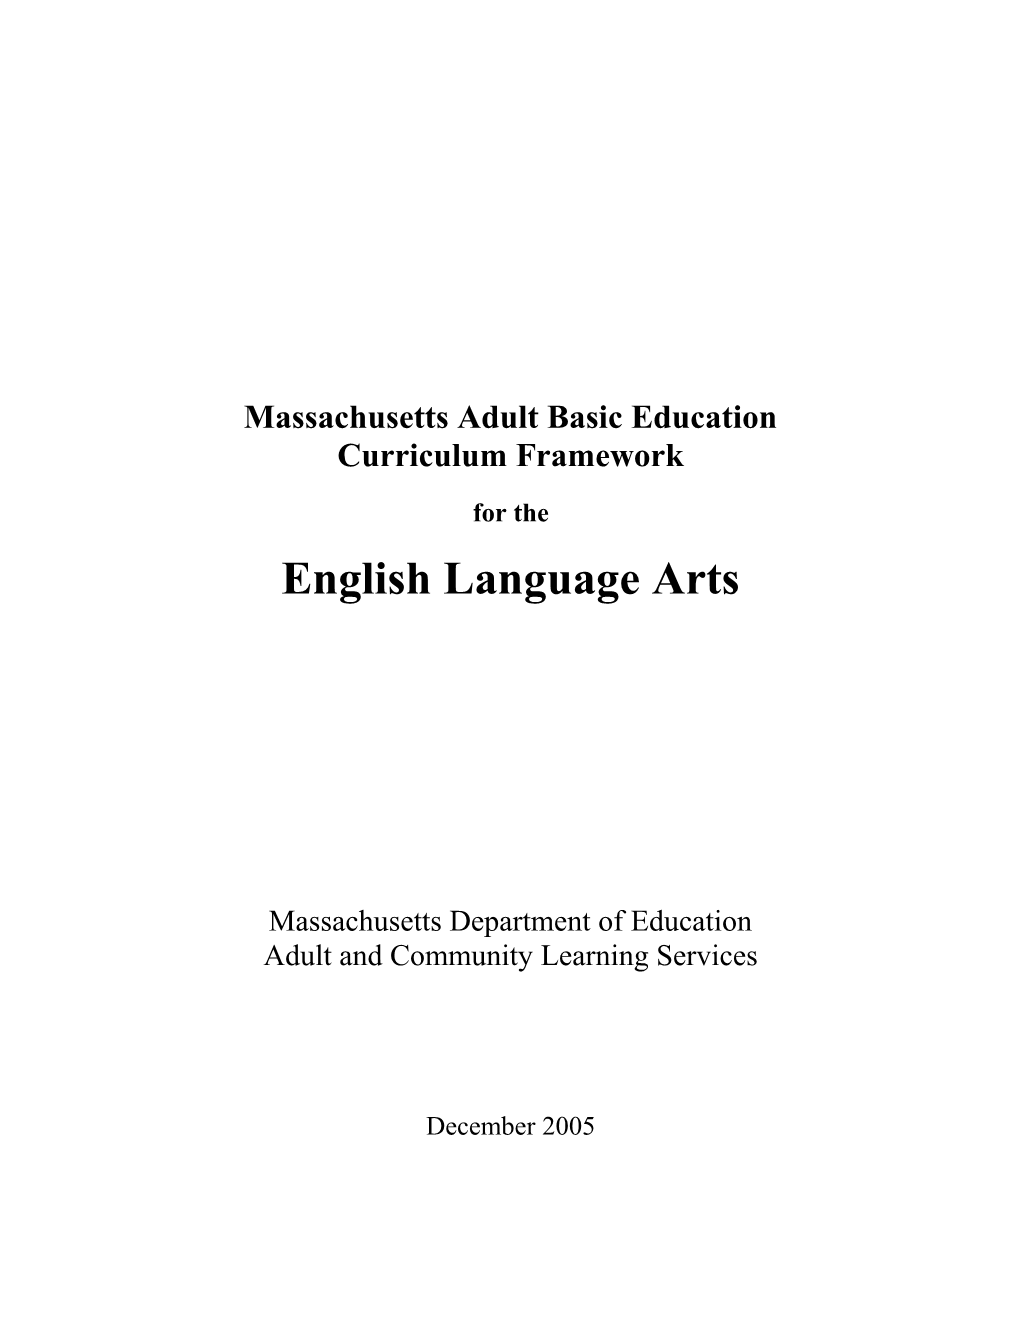 MA ABE Curriculum Framework for English Language Arts